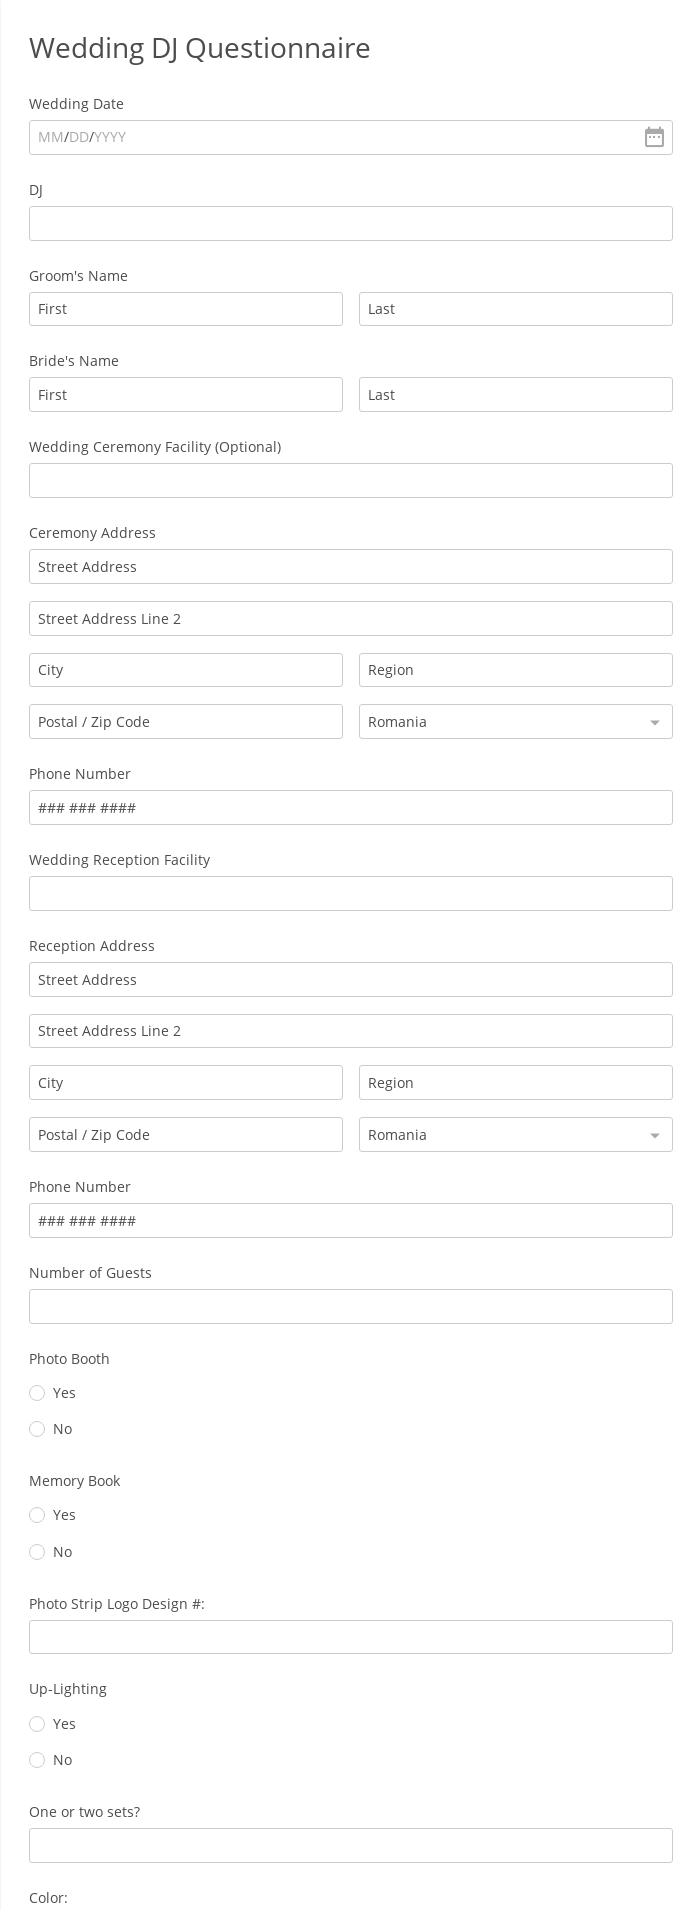 wedding-dj-questionnaire-template-123-form-builder